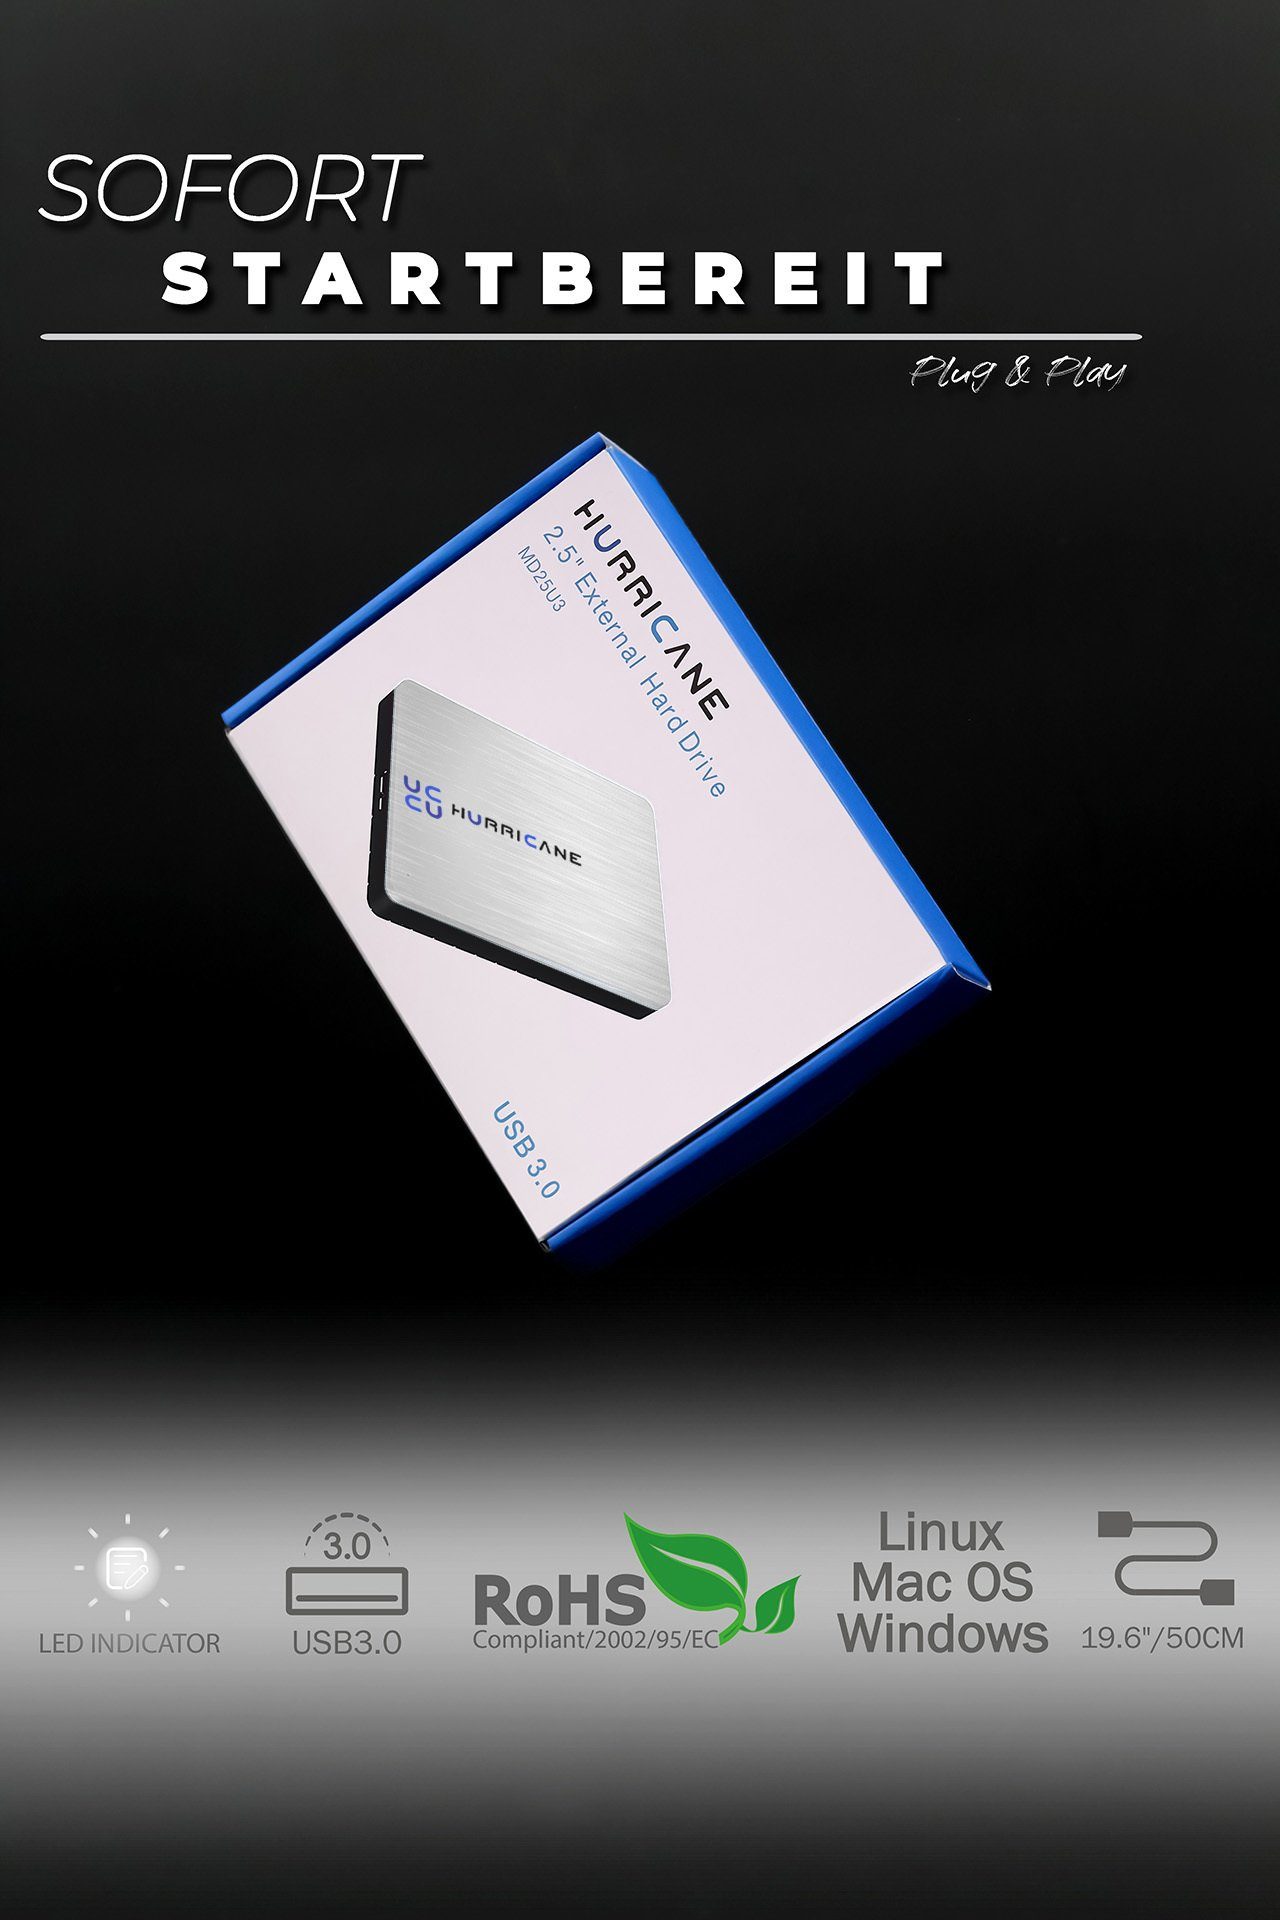 HURRICANE MD25U3 Tragbare Externe Festplatte PS5 smart Laptop externe TV 2,5", (1TB) Linux für 2,5" HDD-Festplatte kompatibel 1TB 3.0 Xbox, PS4 Mac und Windows USB mit